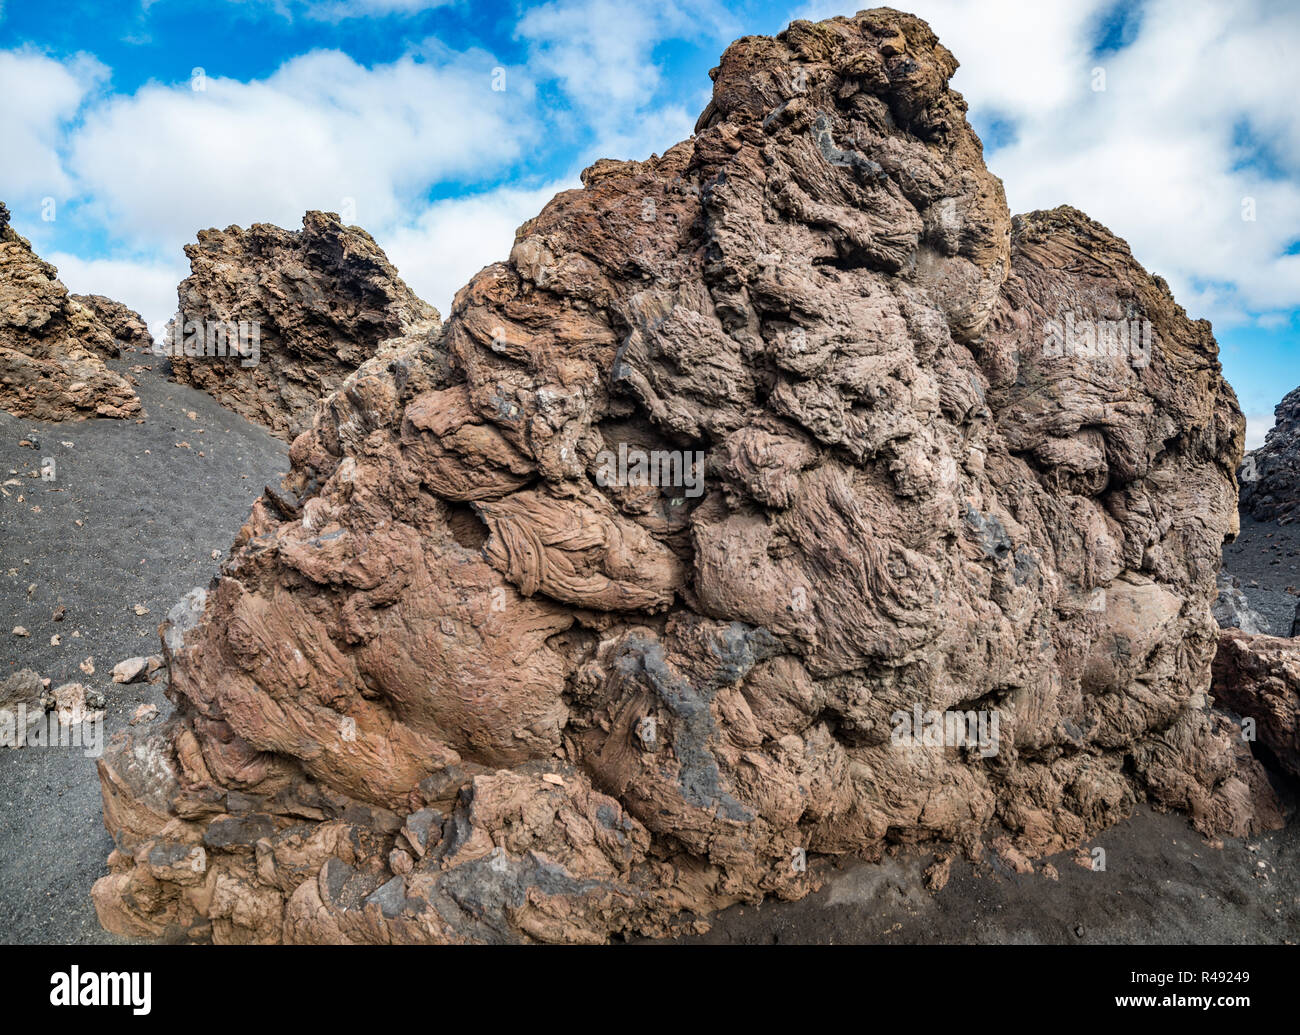 Roccia vulcanica fusa nel vulcano El Cuervo nella Caldera de Los Cuervos, nelle Isole Canarie di Lanzarote Foto Stock